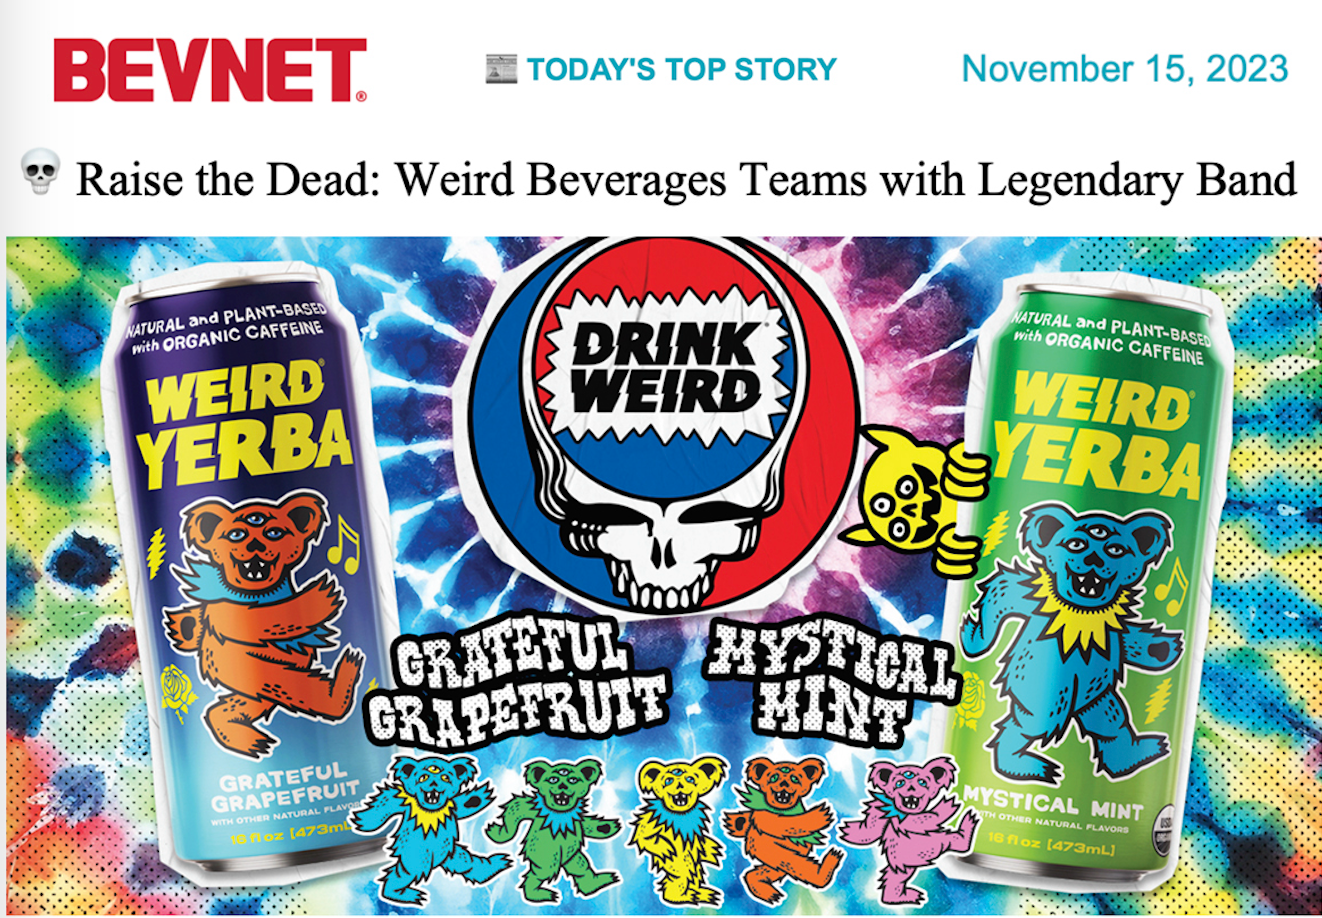 BEVNET: Raise the Dead - Weird Beverages Teams With Legendary Band